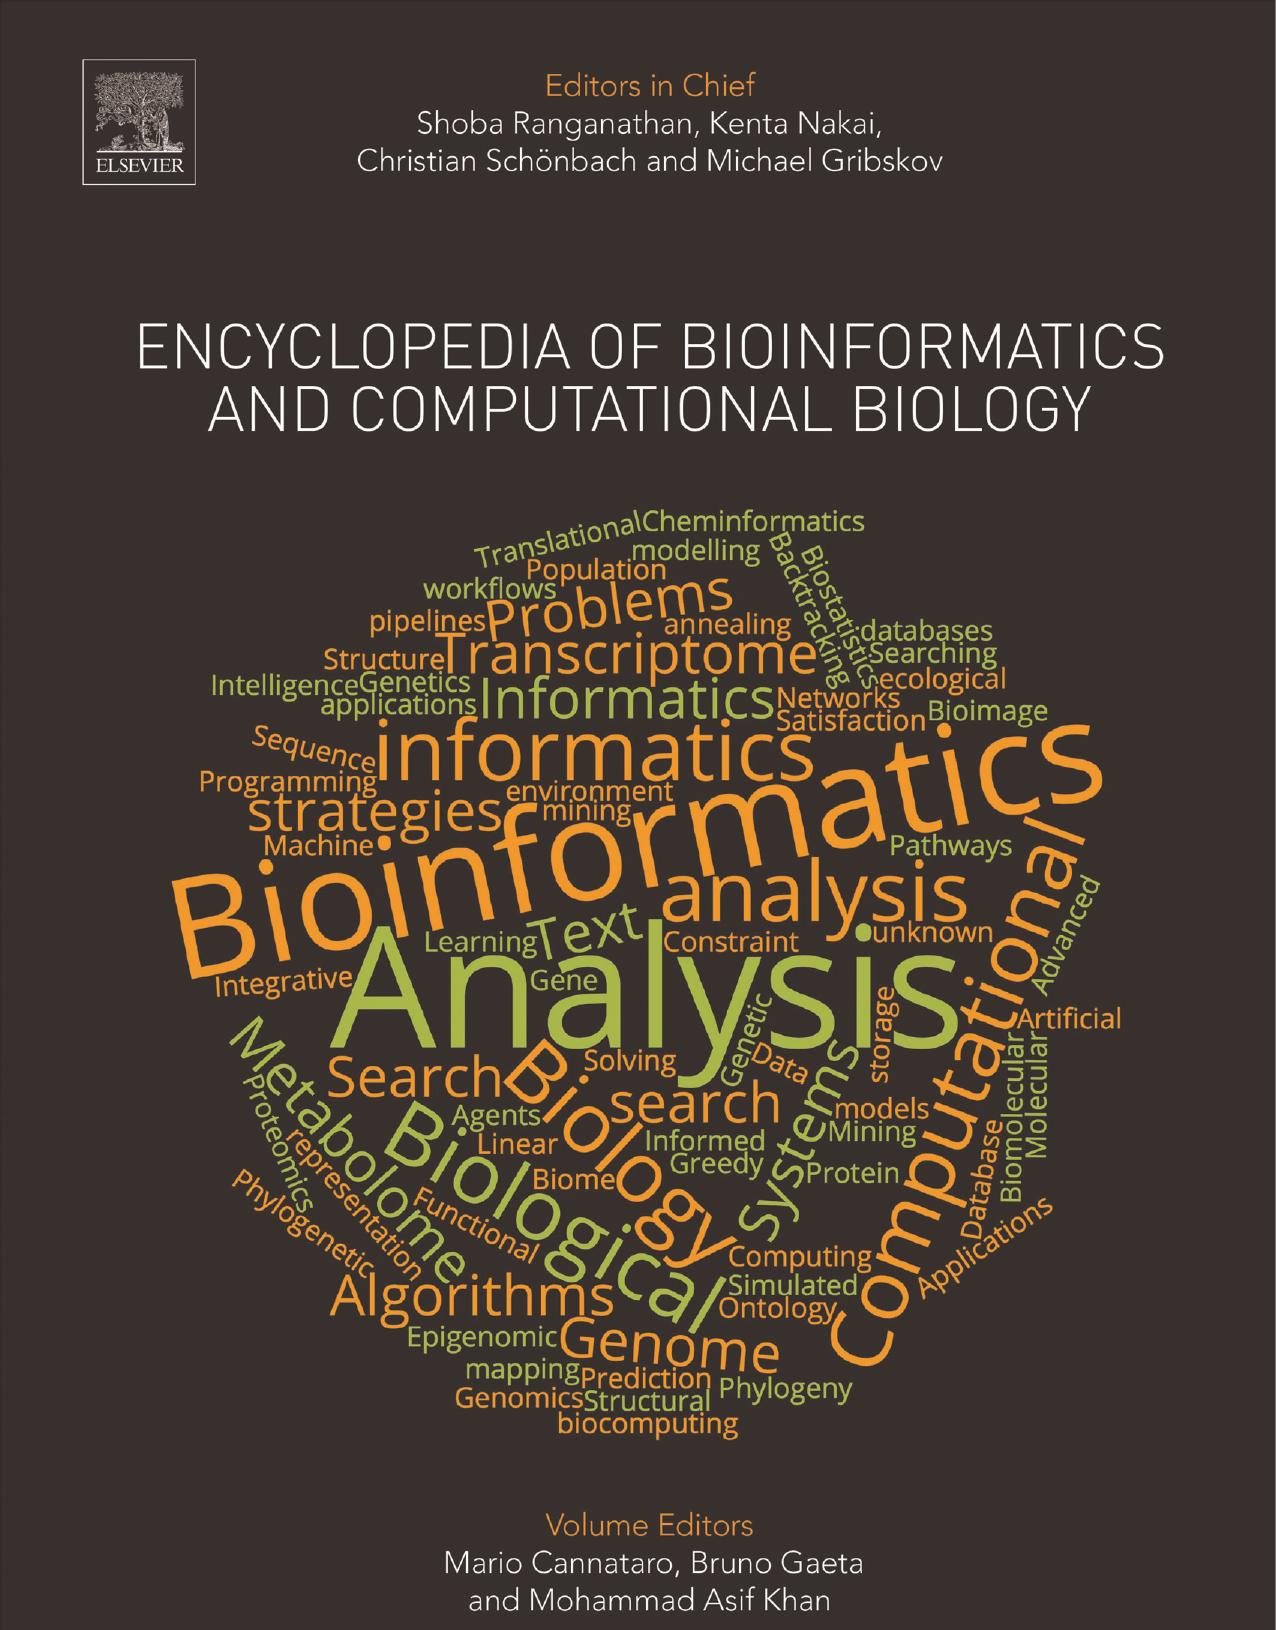 Encyclopedia of Bioinformatics and Computational Biology: ABC of Bioinformatics